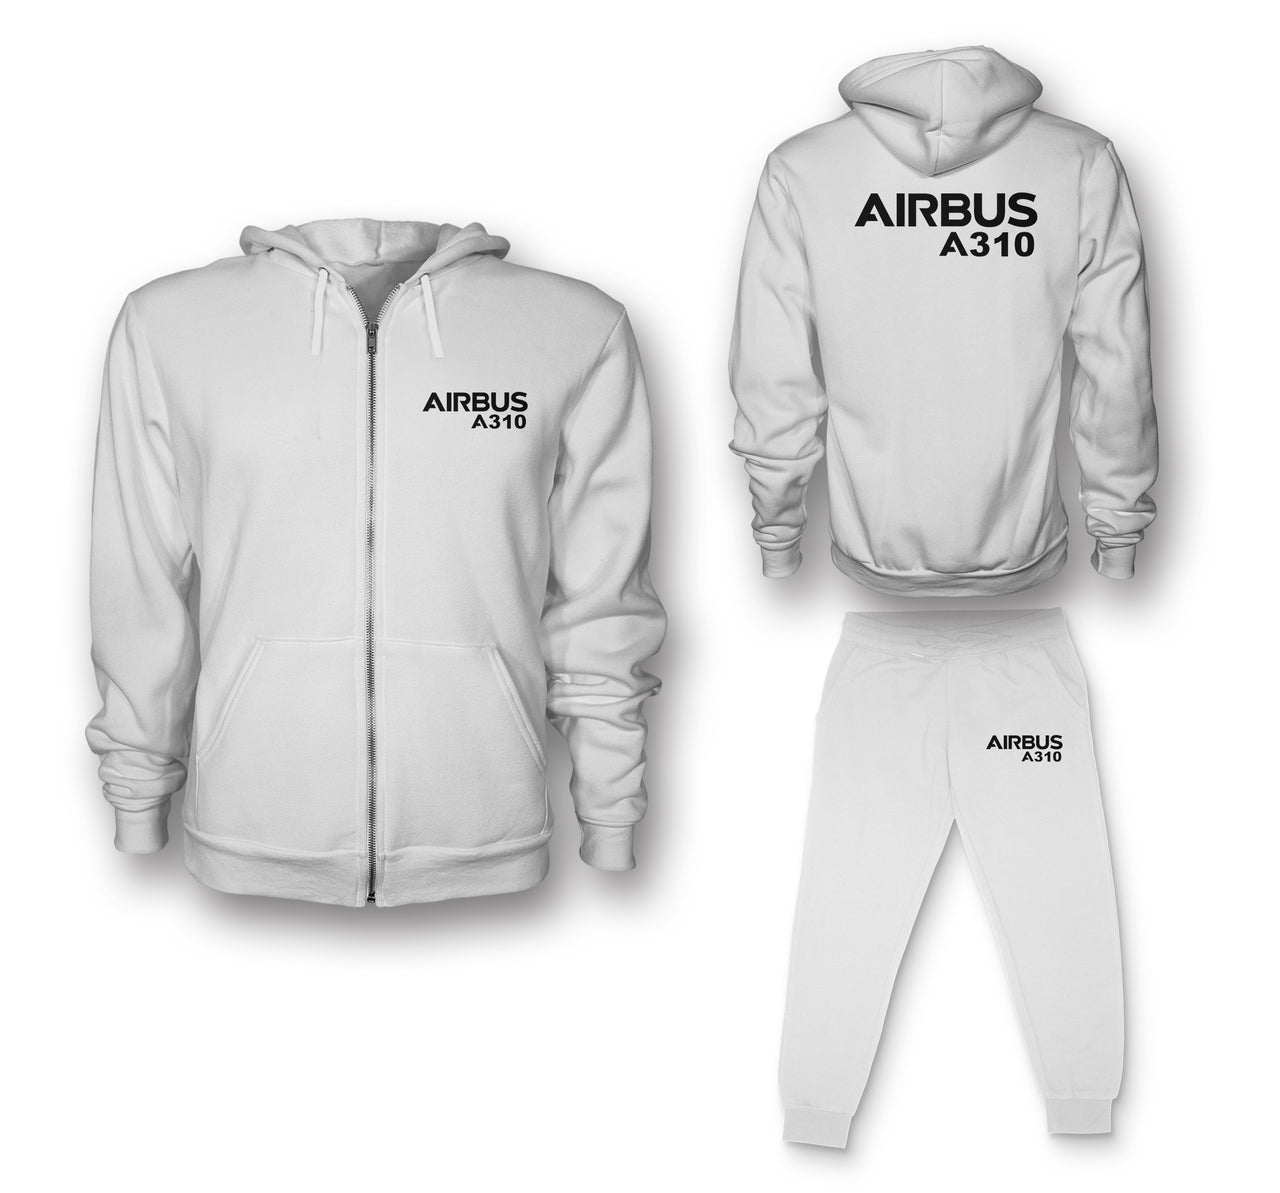 Airbus A310 & Text Designed Zipped Hoodies & Sweatpants Set